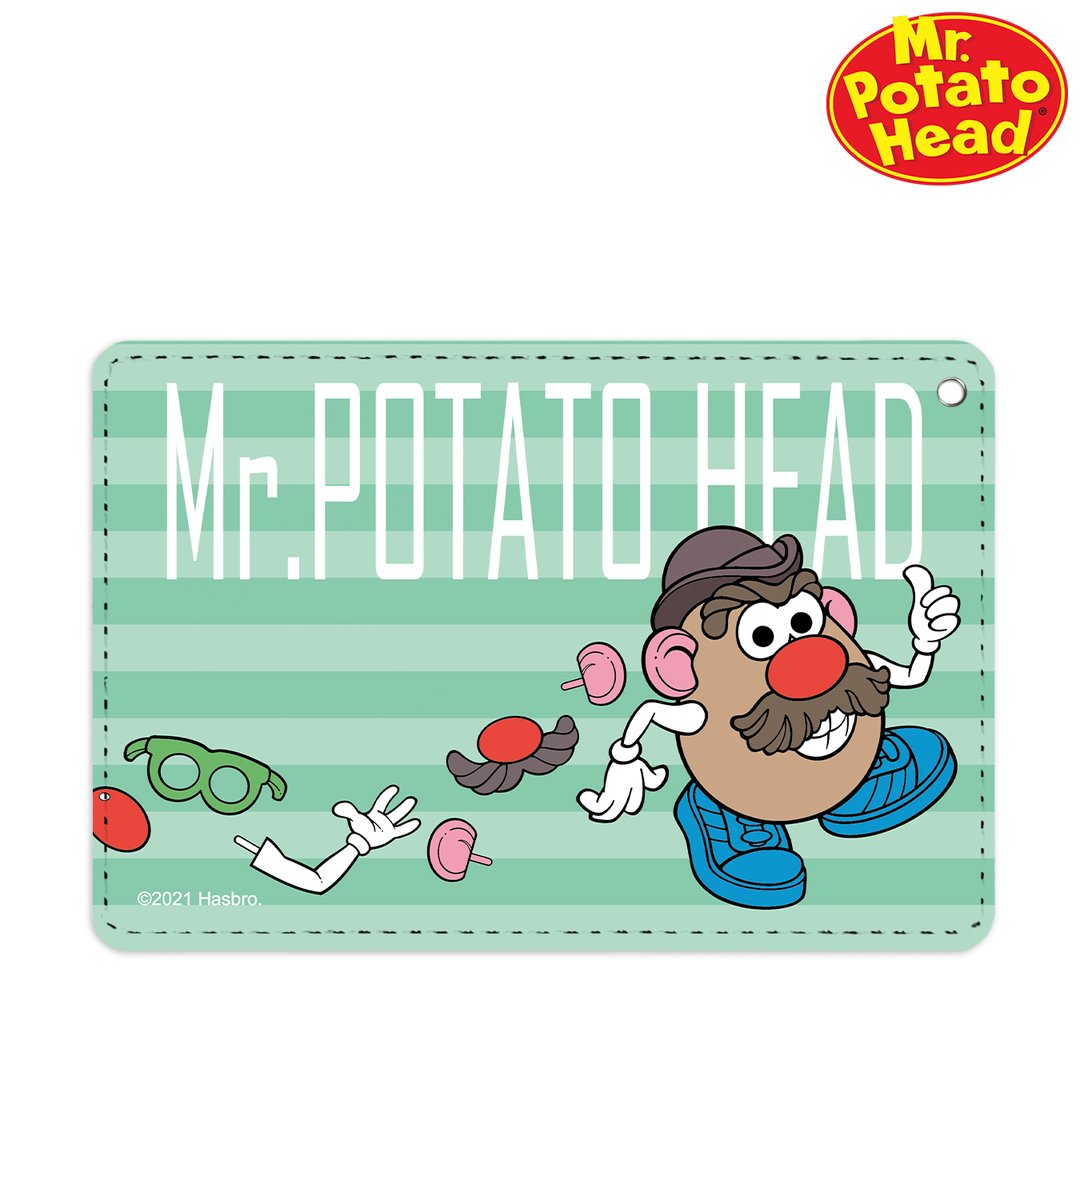 Mr Potato Head ミスターポテトヘッド 公式 Mph Jp Twitter